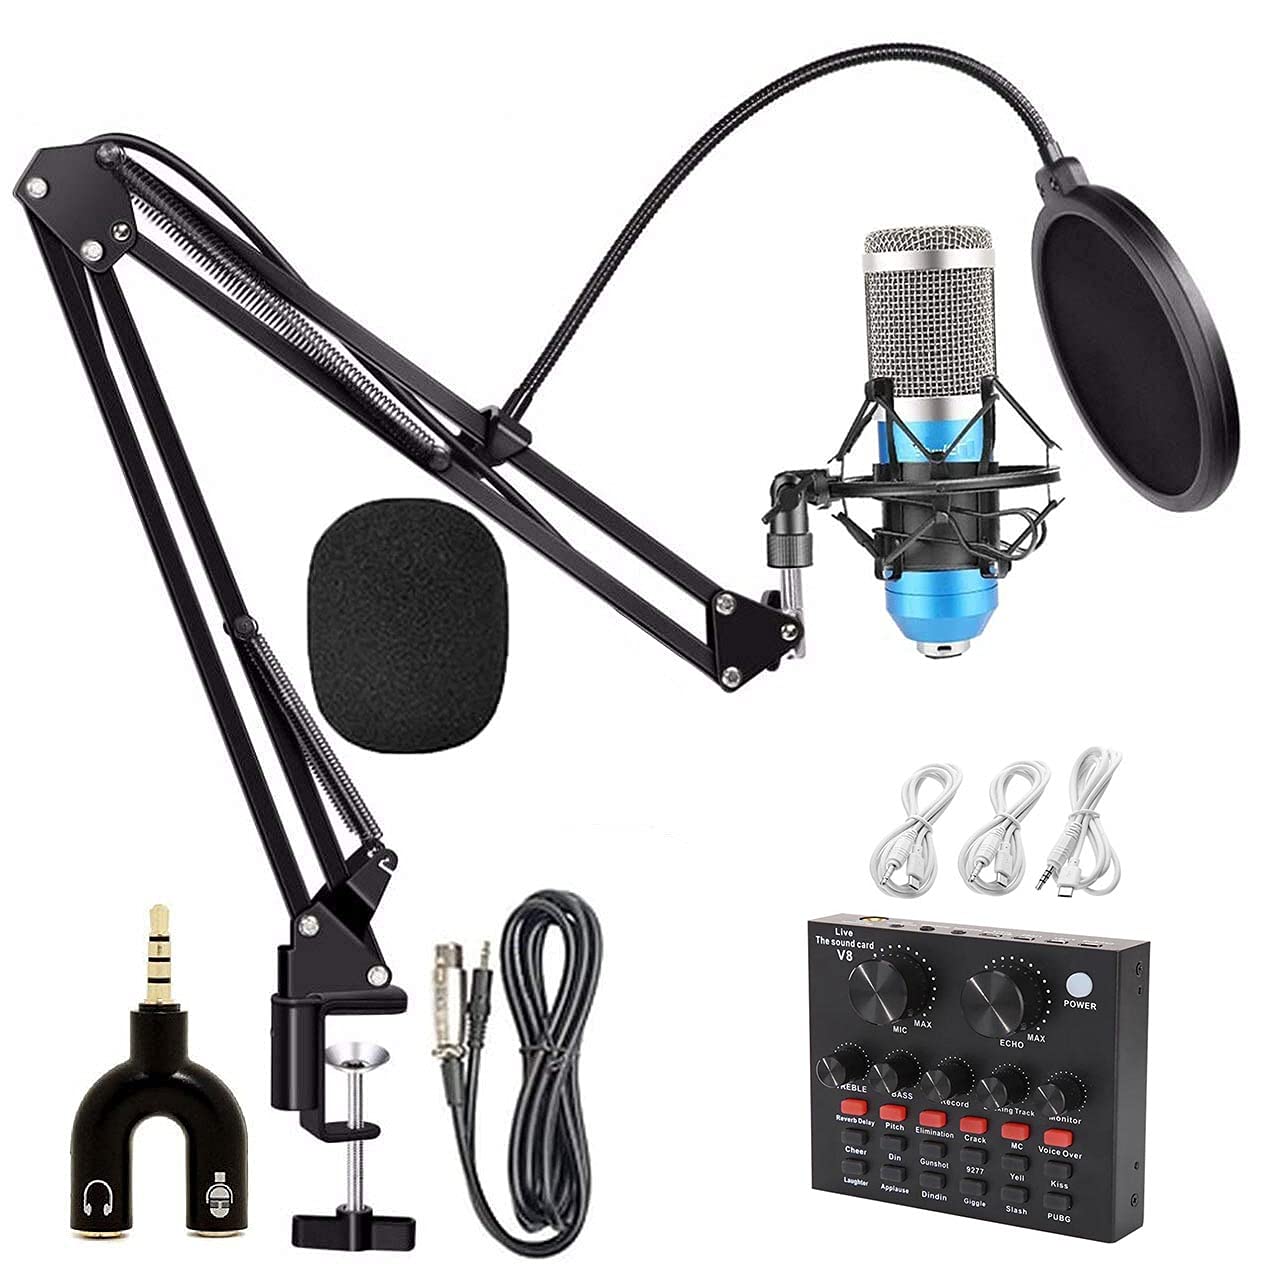 Souvenir Bm800 Condenser Mic With Arm Stand Shock Mount Pop Filter V8 Live Sound Card Anti Wind Foam Full Condenser Microphone Recording